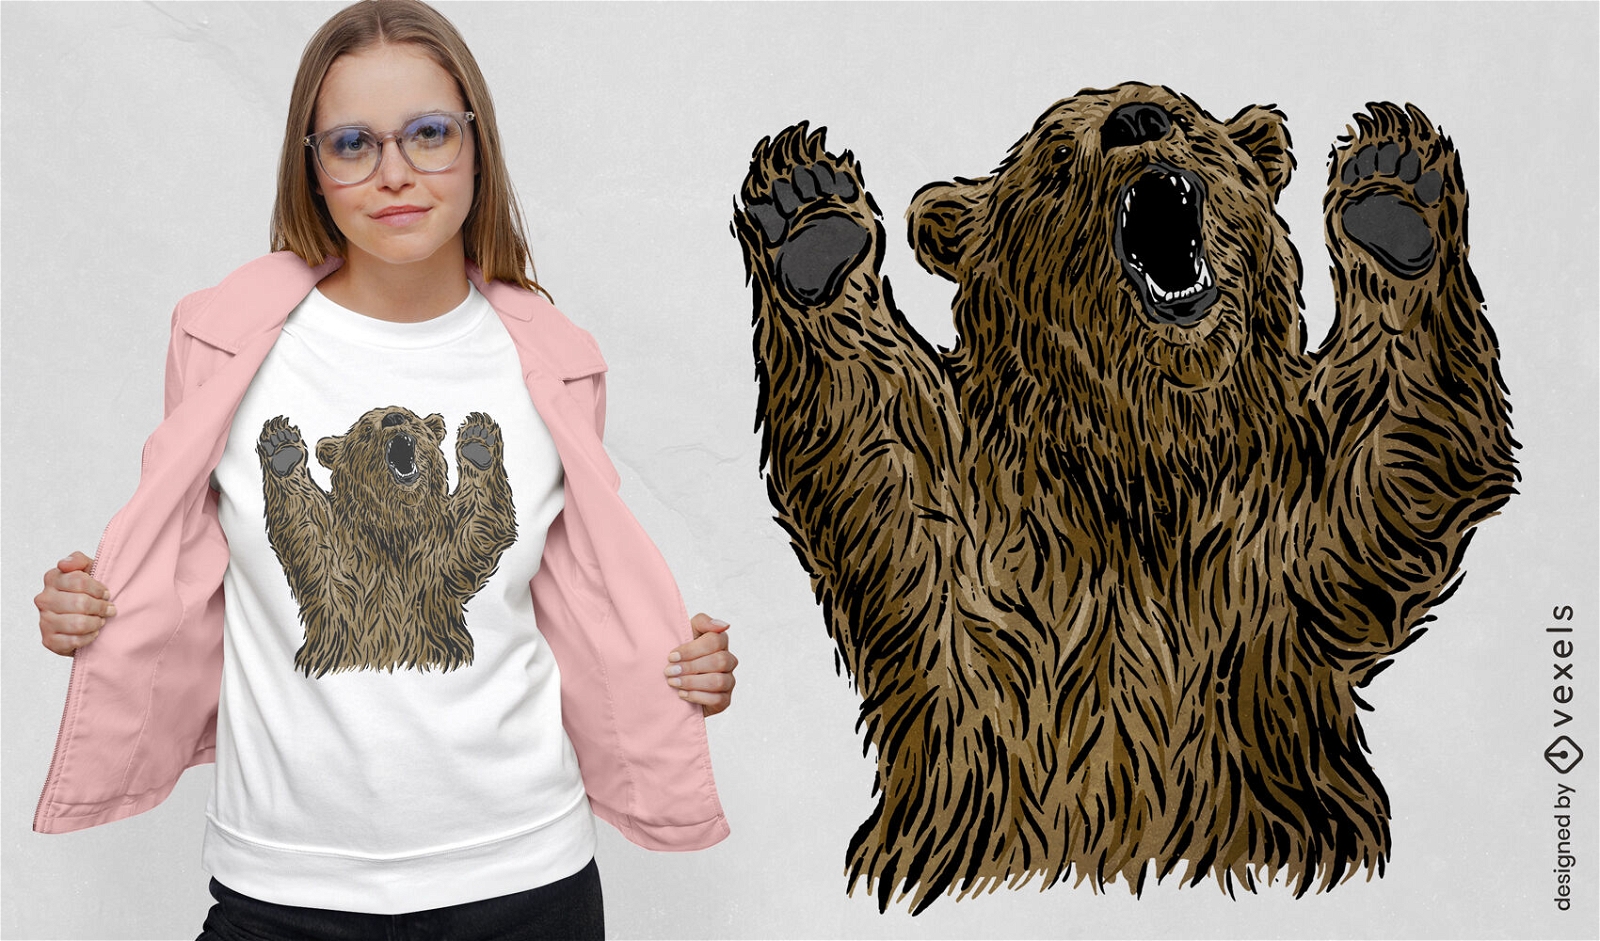 Brown bear wild animal attack t-shirt design